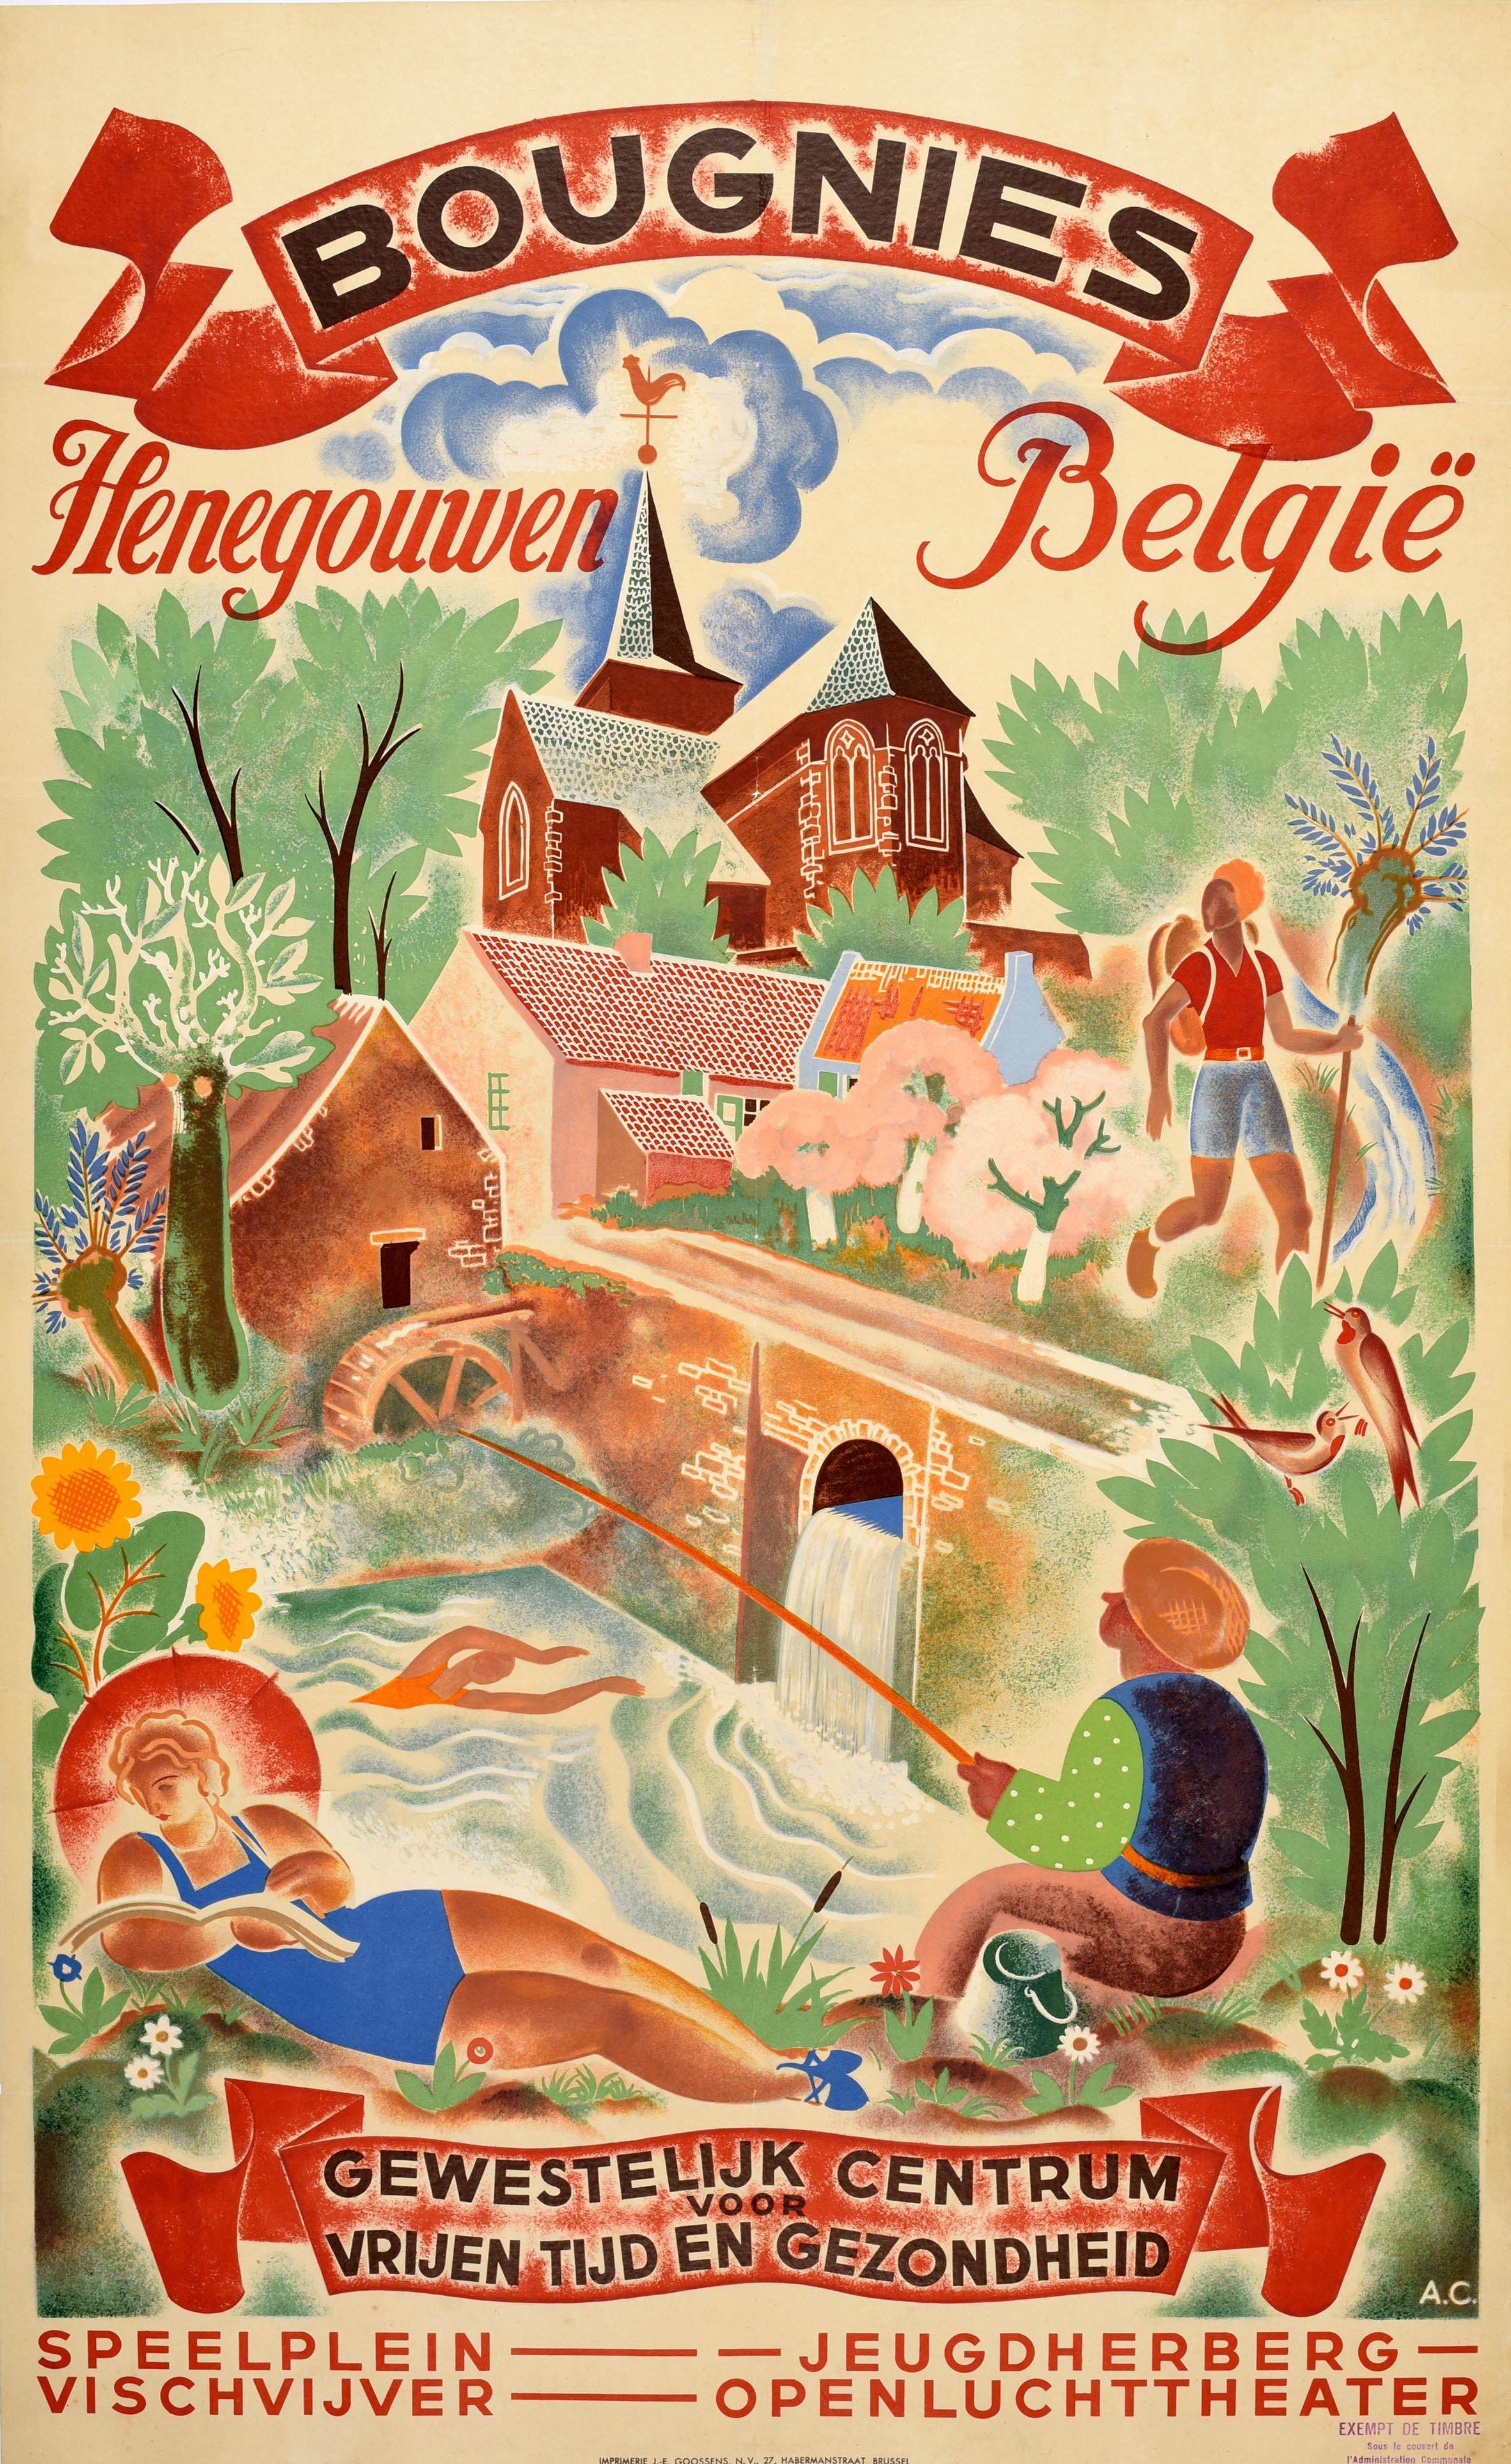 Original-Vintage-Reiseplakat Bougnies Henegouwen, Belgien, Sport, Reisen